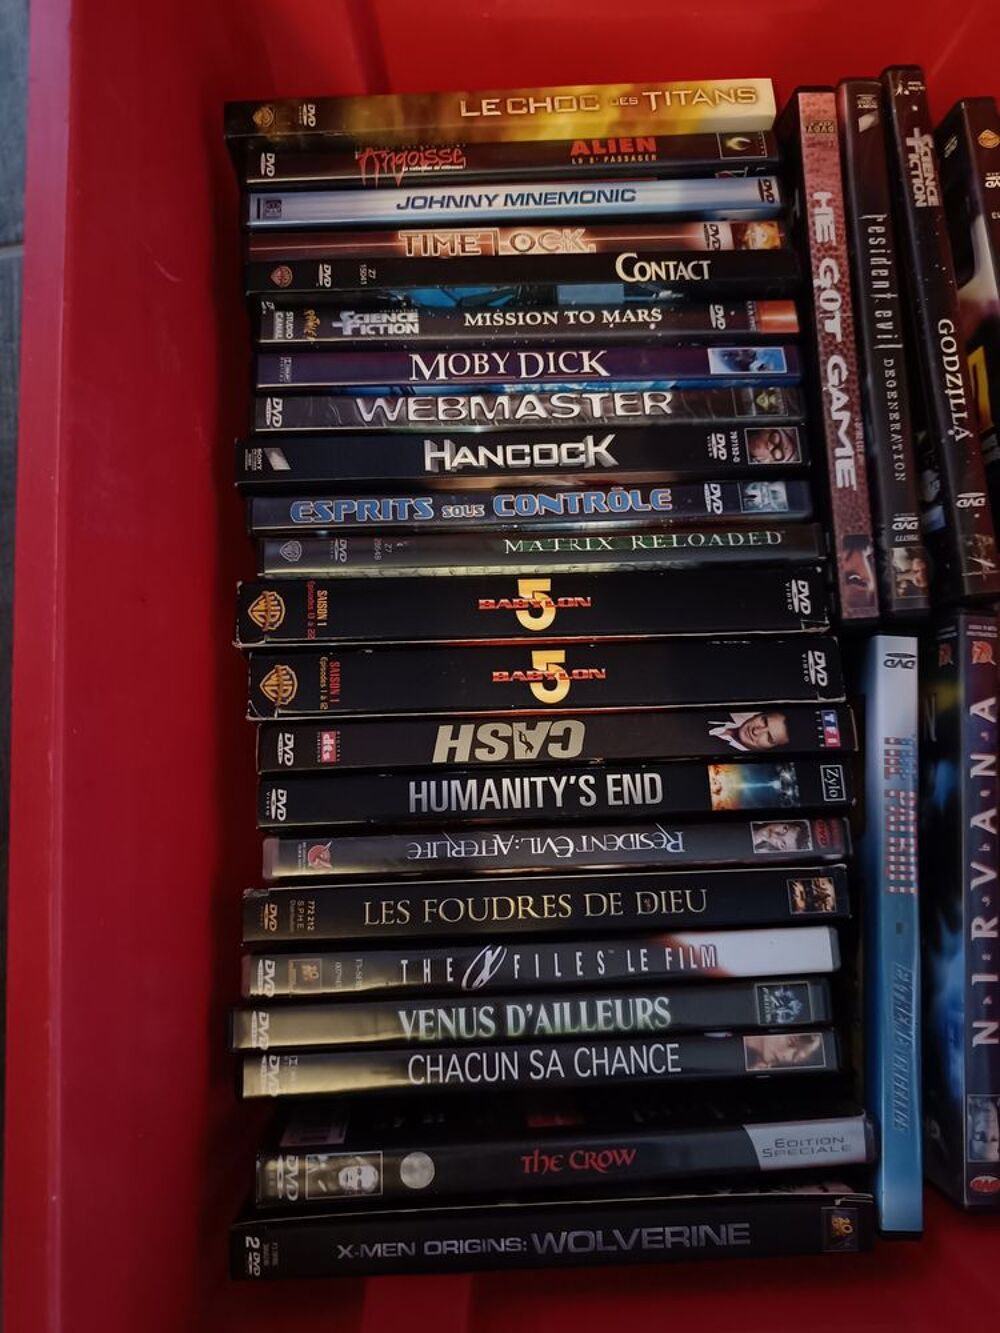 Lot de 50 dvd comedie thriller policier
DVD et blu-ray